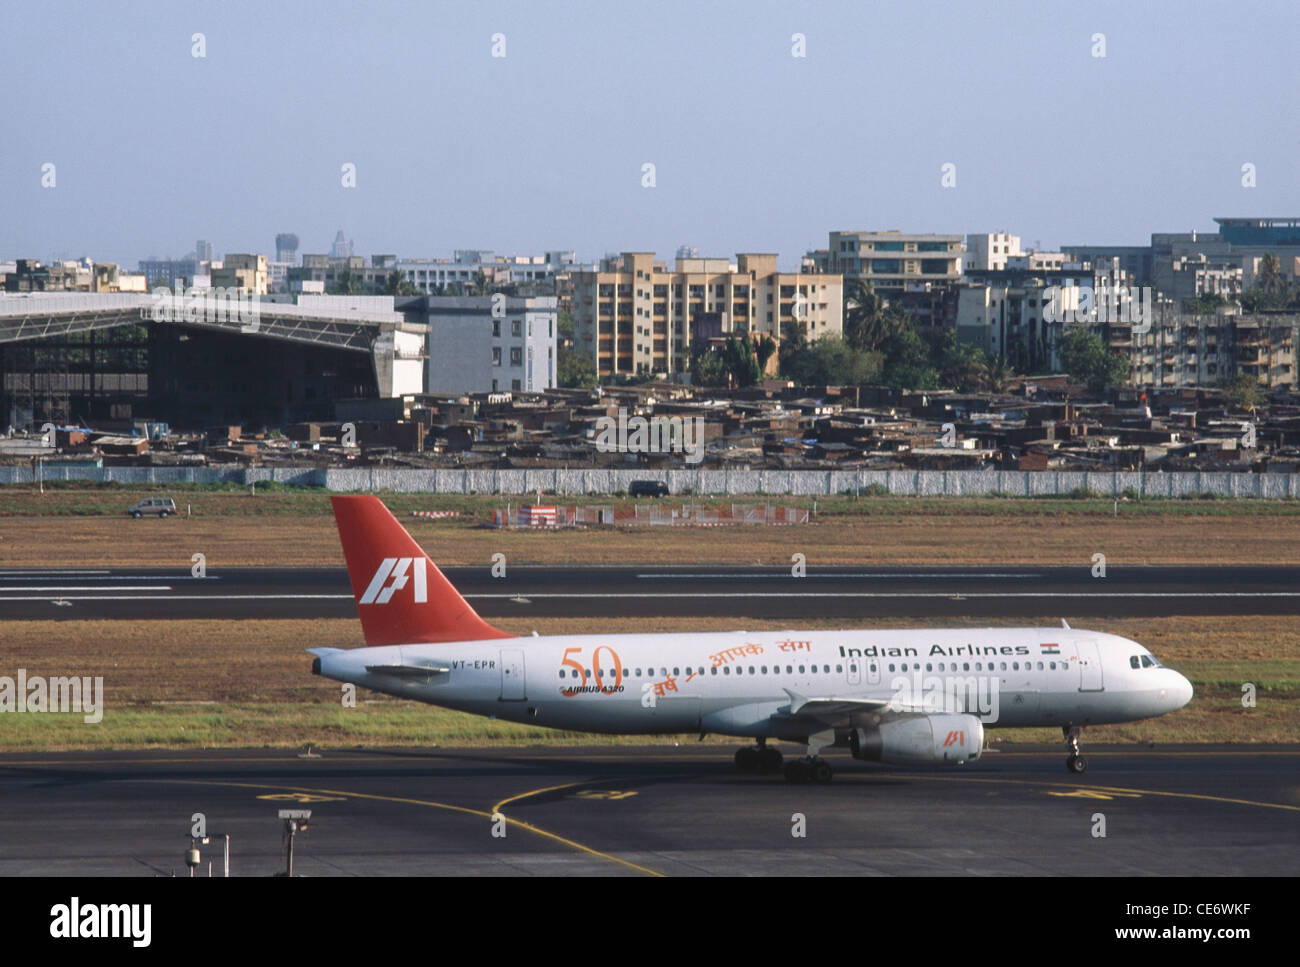 HMA 85381 : avion d'Indian Airlines sur le tarmac de l'aéroport Sahar santacruz Bombay Mumbai maharashtra Inde Banque D'Images